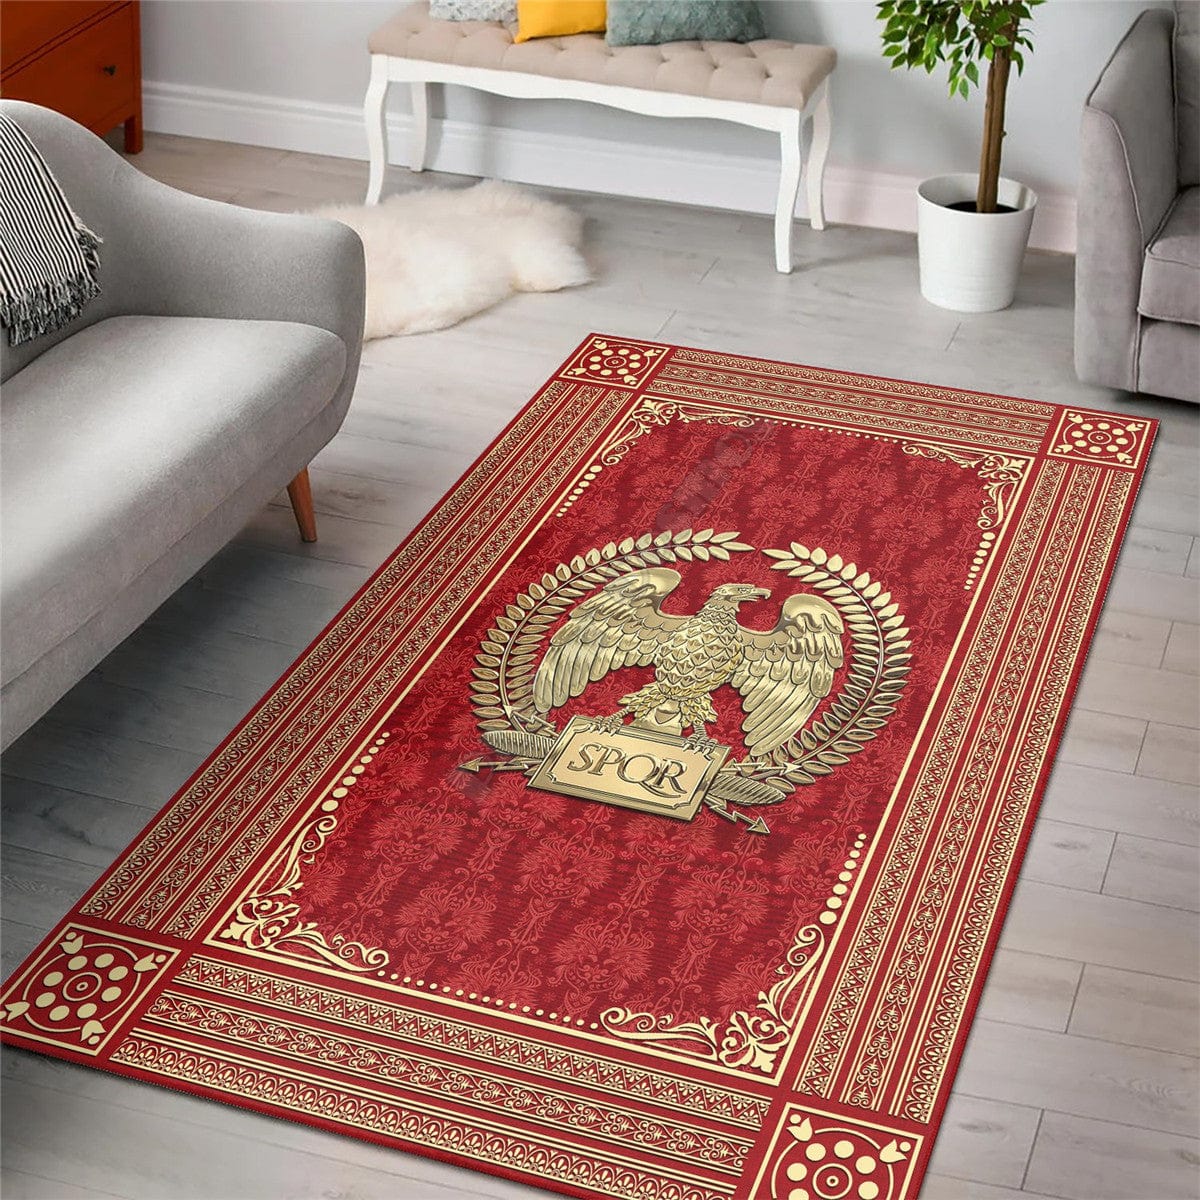 ALDO Decor > Rugs Roman Empire Rug Collection Carpet Luxury Non-Slip Floor Mat Red Rug Carpet